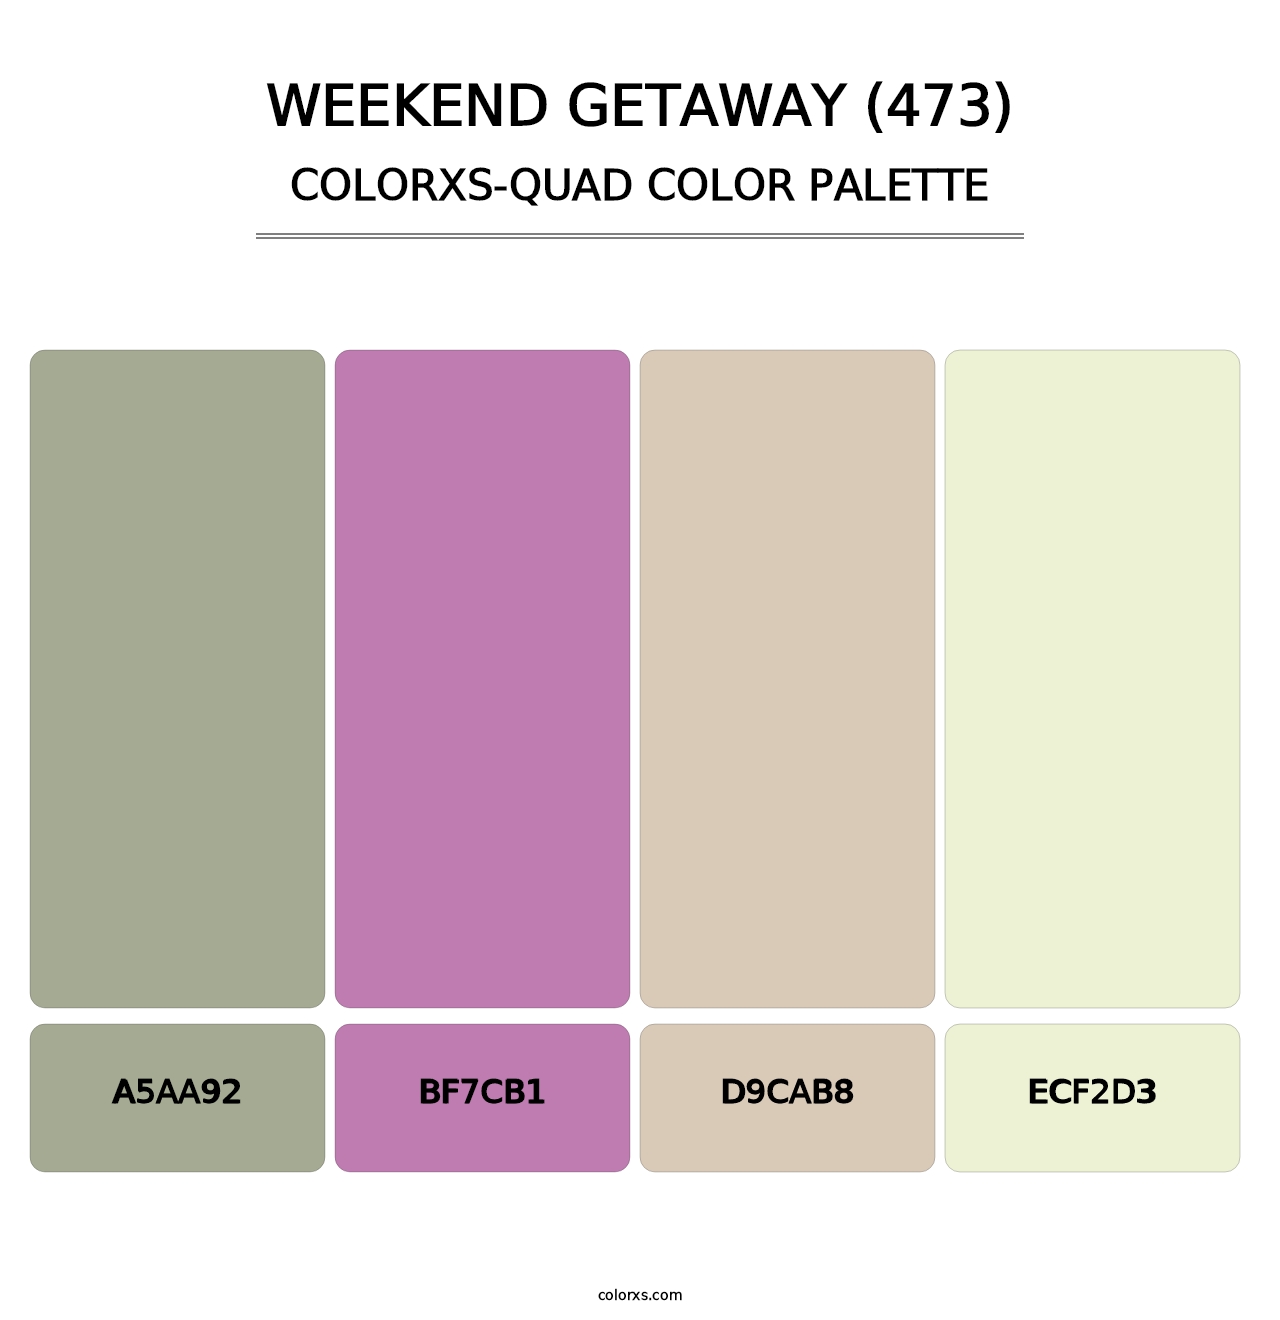 Weekend Getaway (473) - Colorxs Quad Palette